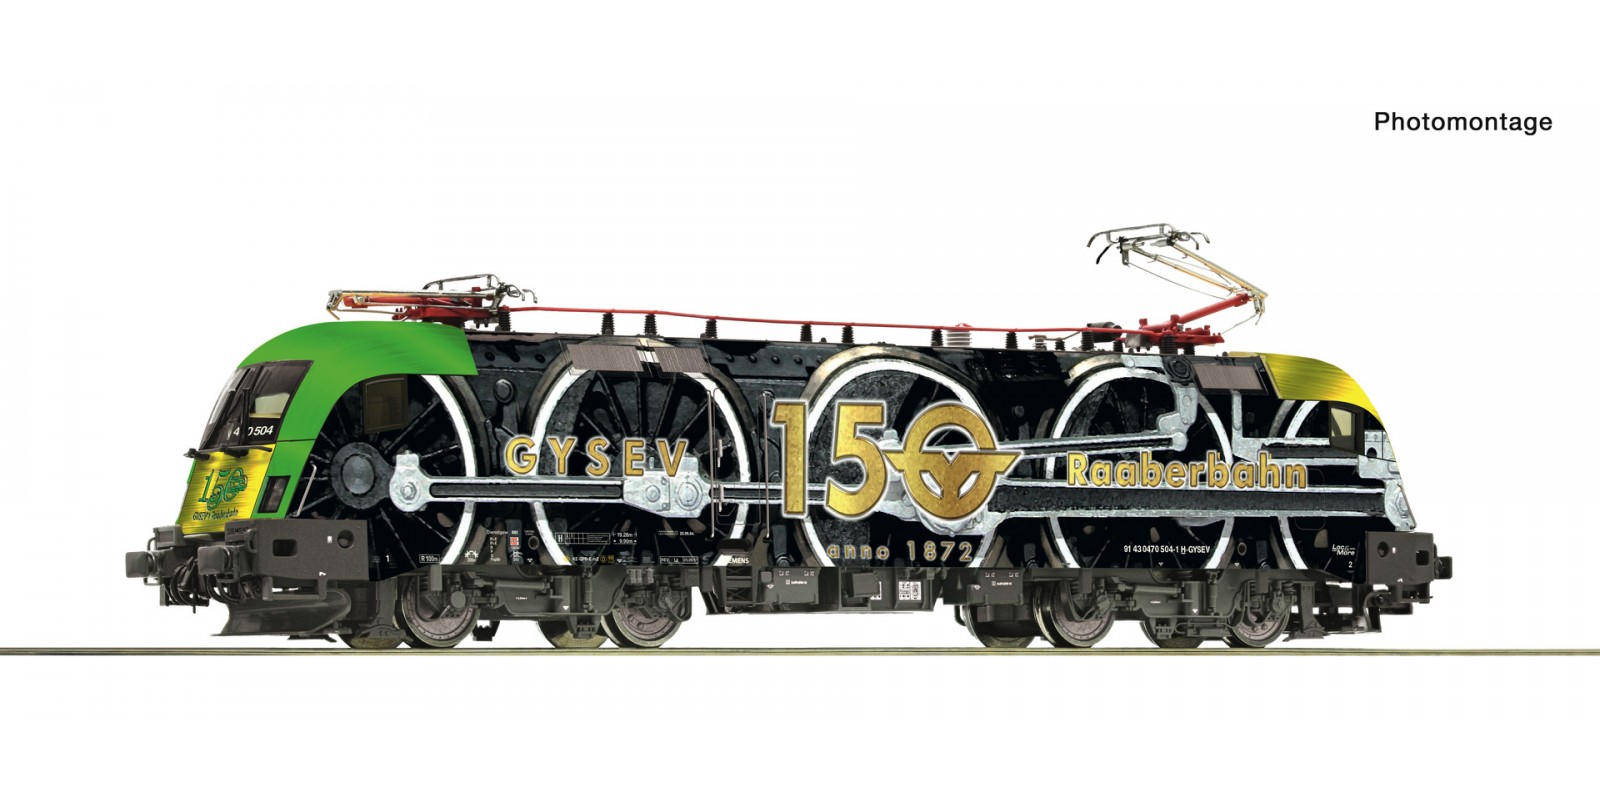 RO70686 Electric locomotive 470 504-1, GYSEV